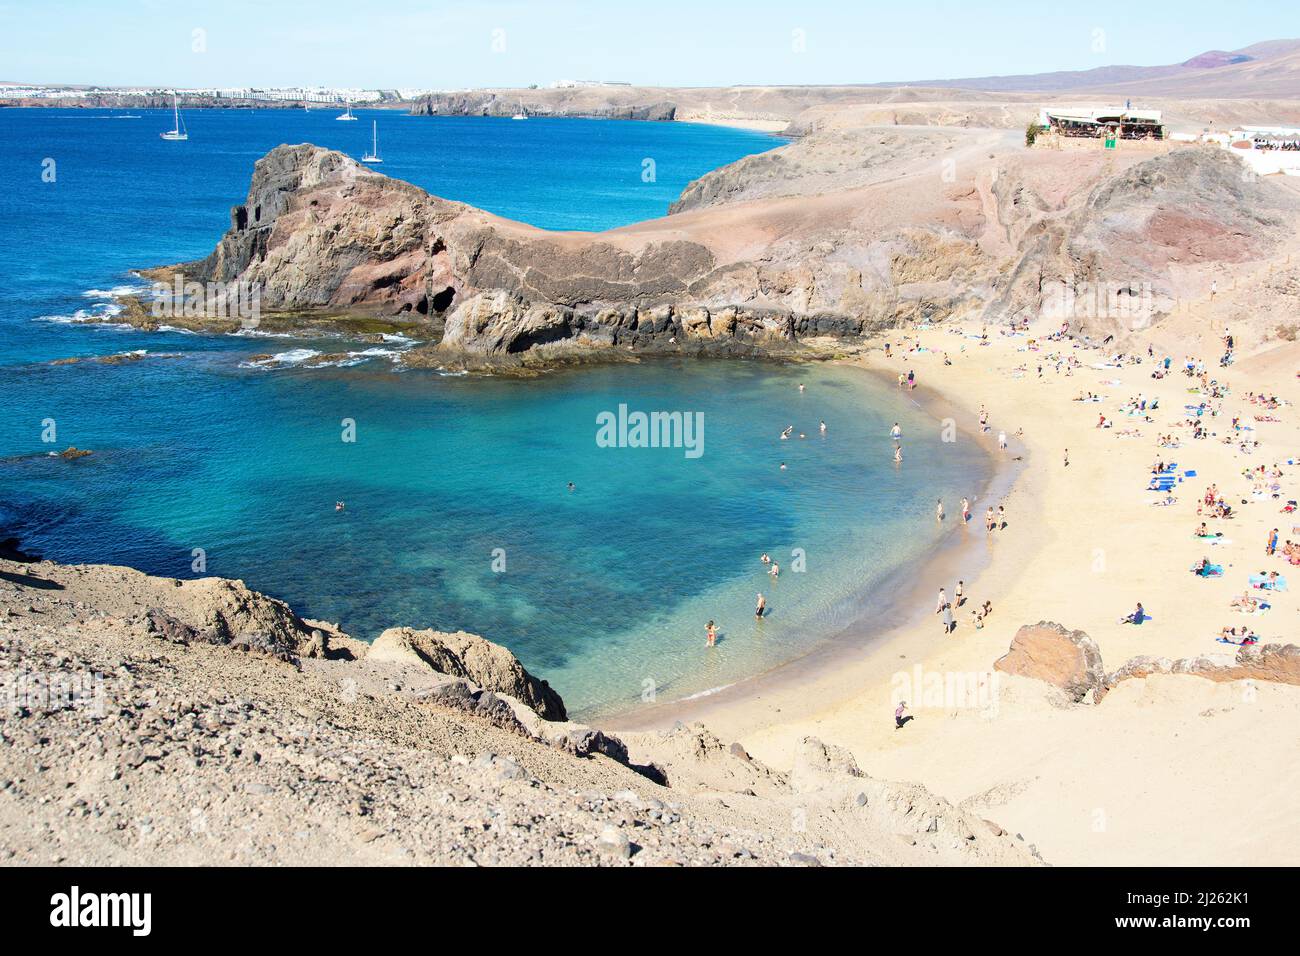 Spiaggia di Papagayo, Playa Blanca, Isole Canarie, Spagna Foto Stock